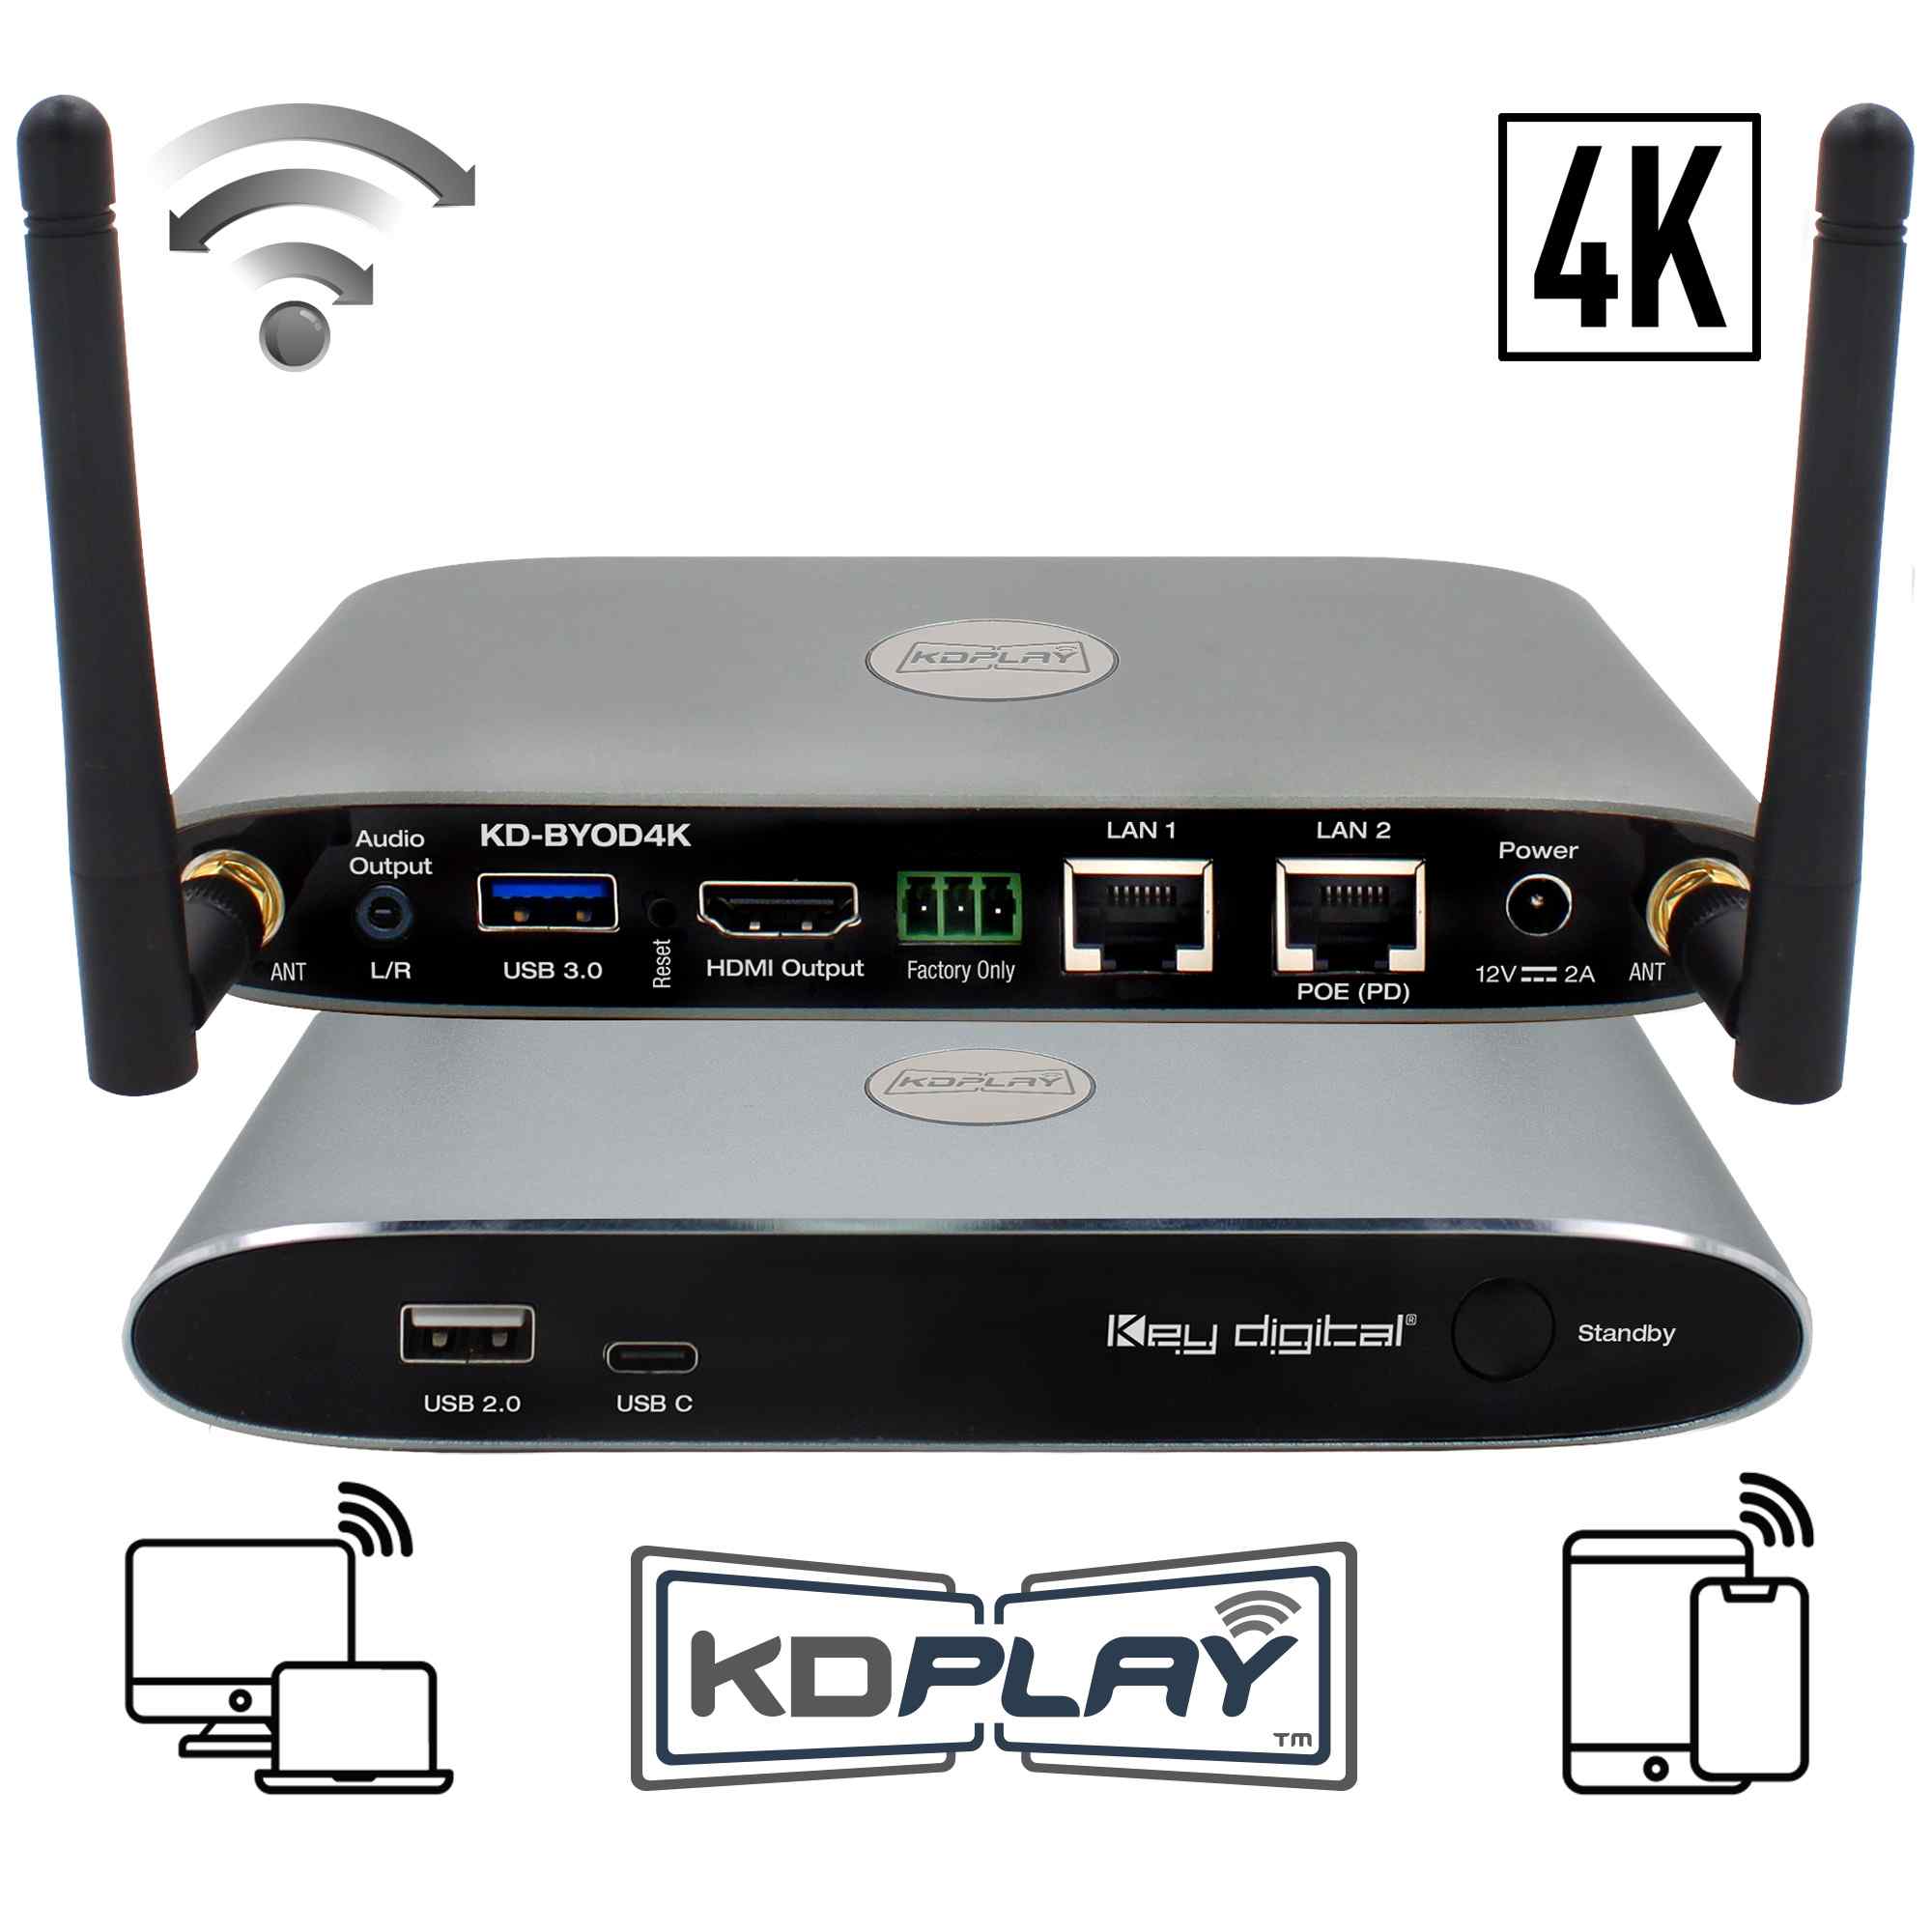 Thumbnail of Key Digital wireless presentation gateway front and rear view